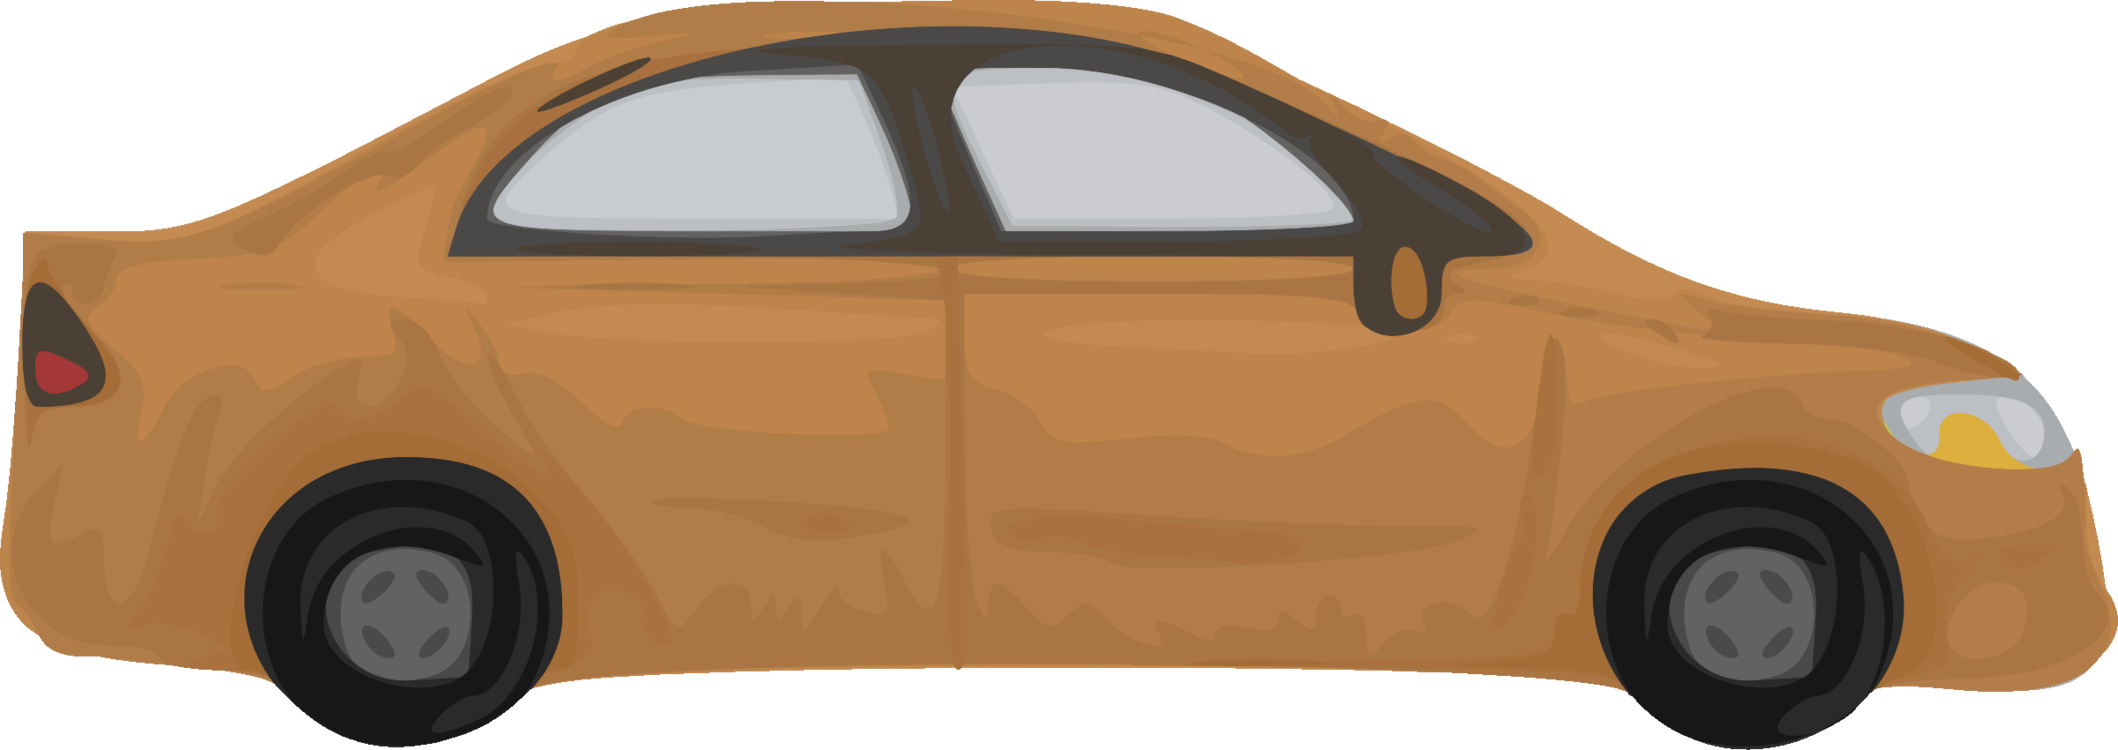 Automotive Exterior,Compact Car,Car